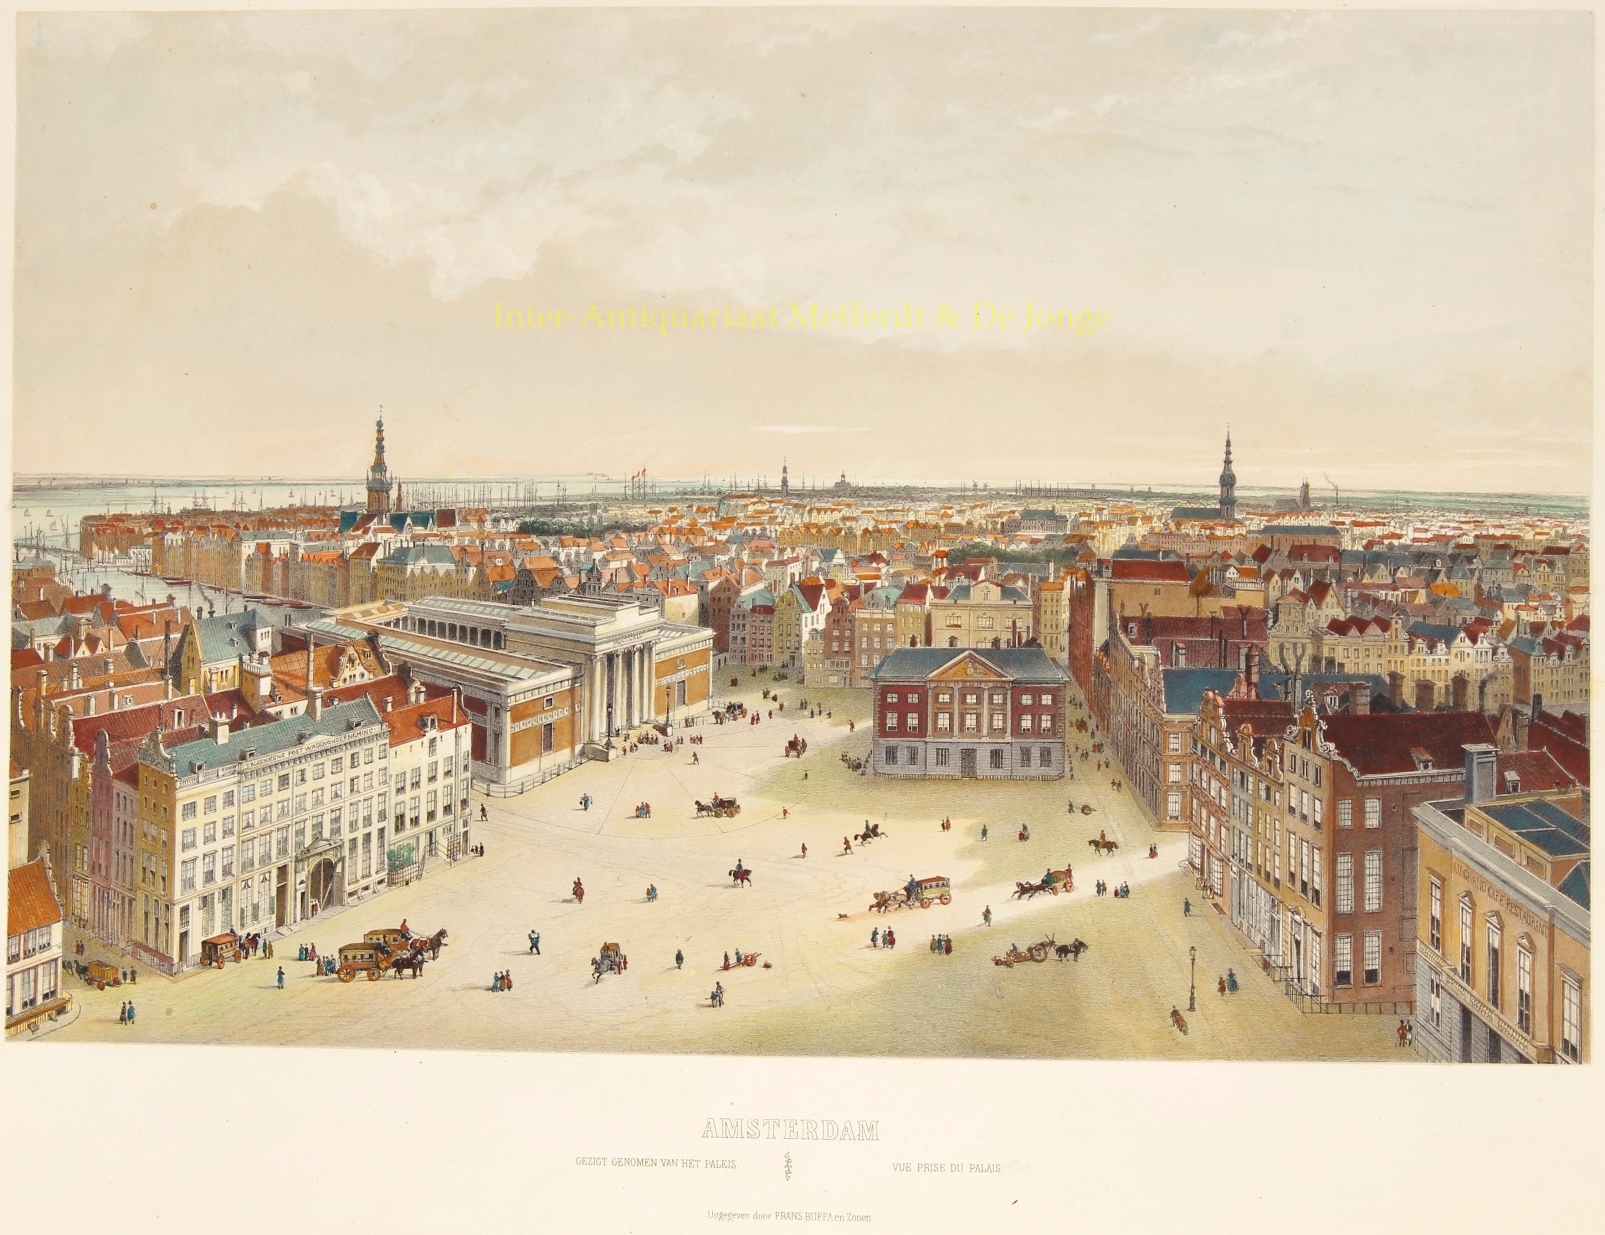 Buffa & Zn. - Amsterdam, Dam, beurs van Zocher - Buffa, ca. 1840